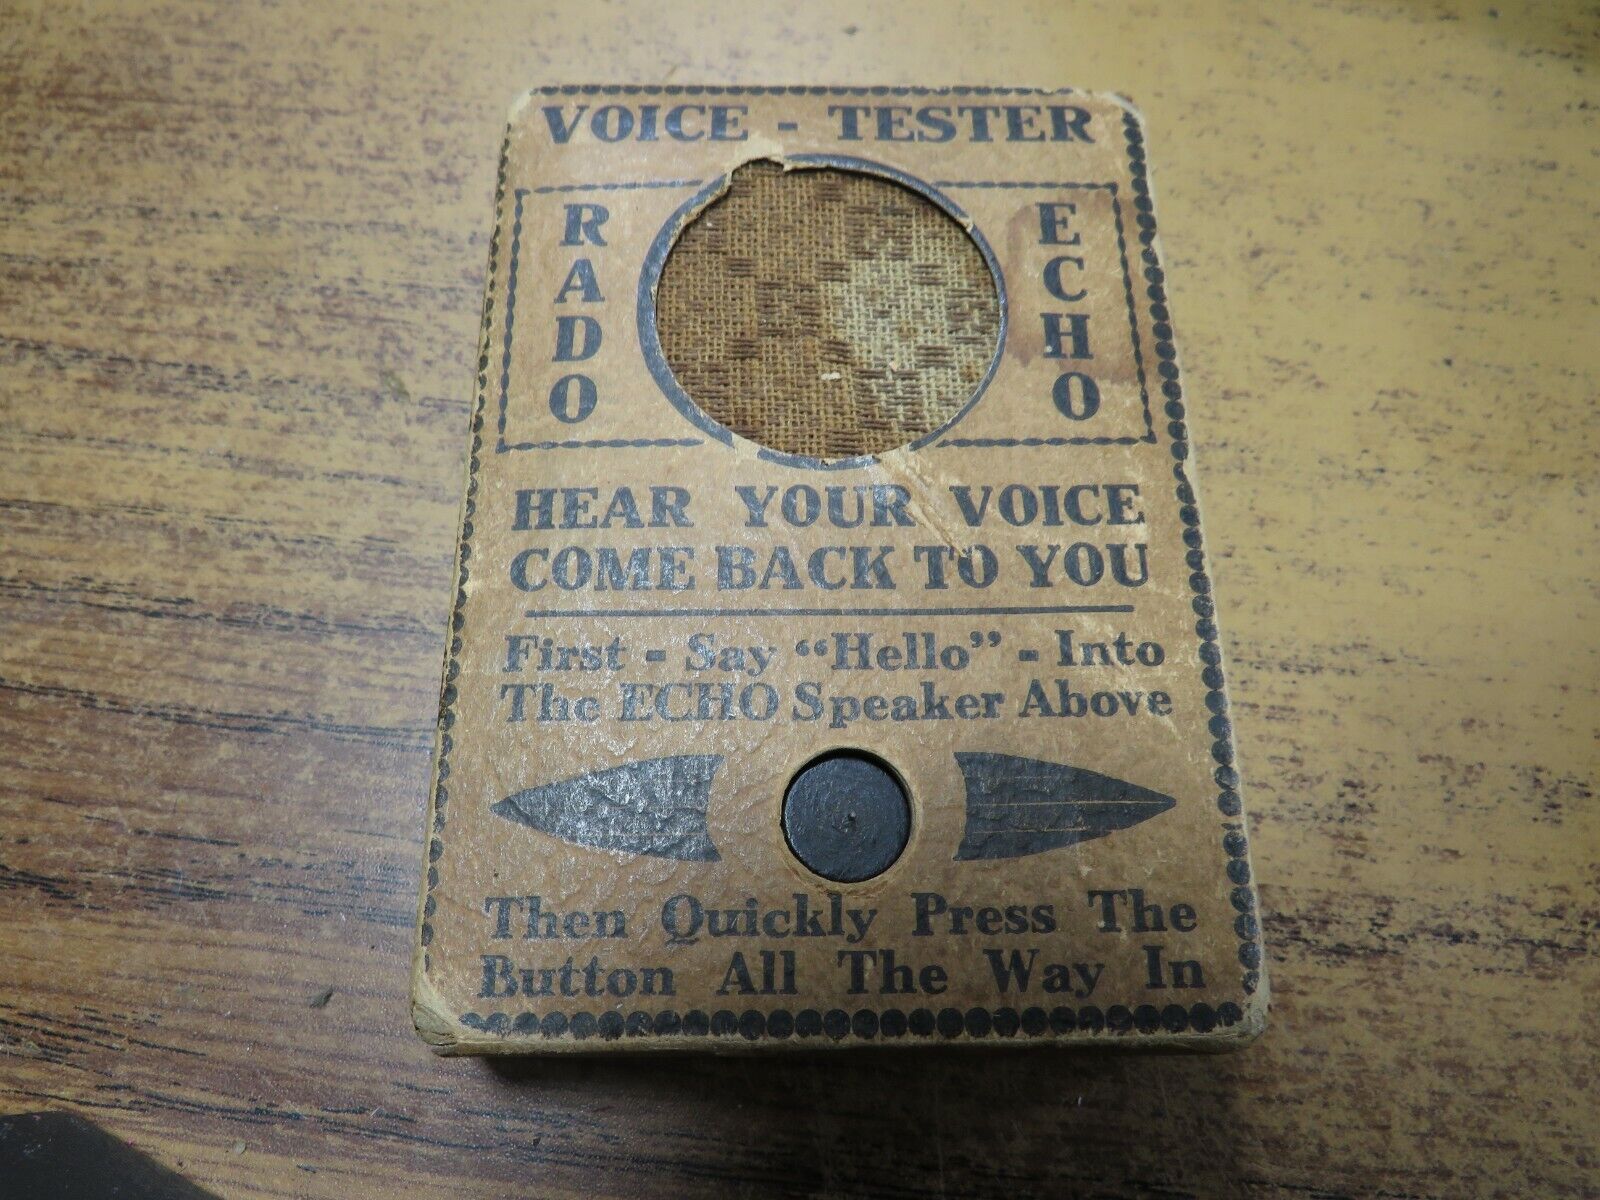 Antique Rado Echo Voice Tester Gag Device